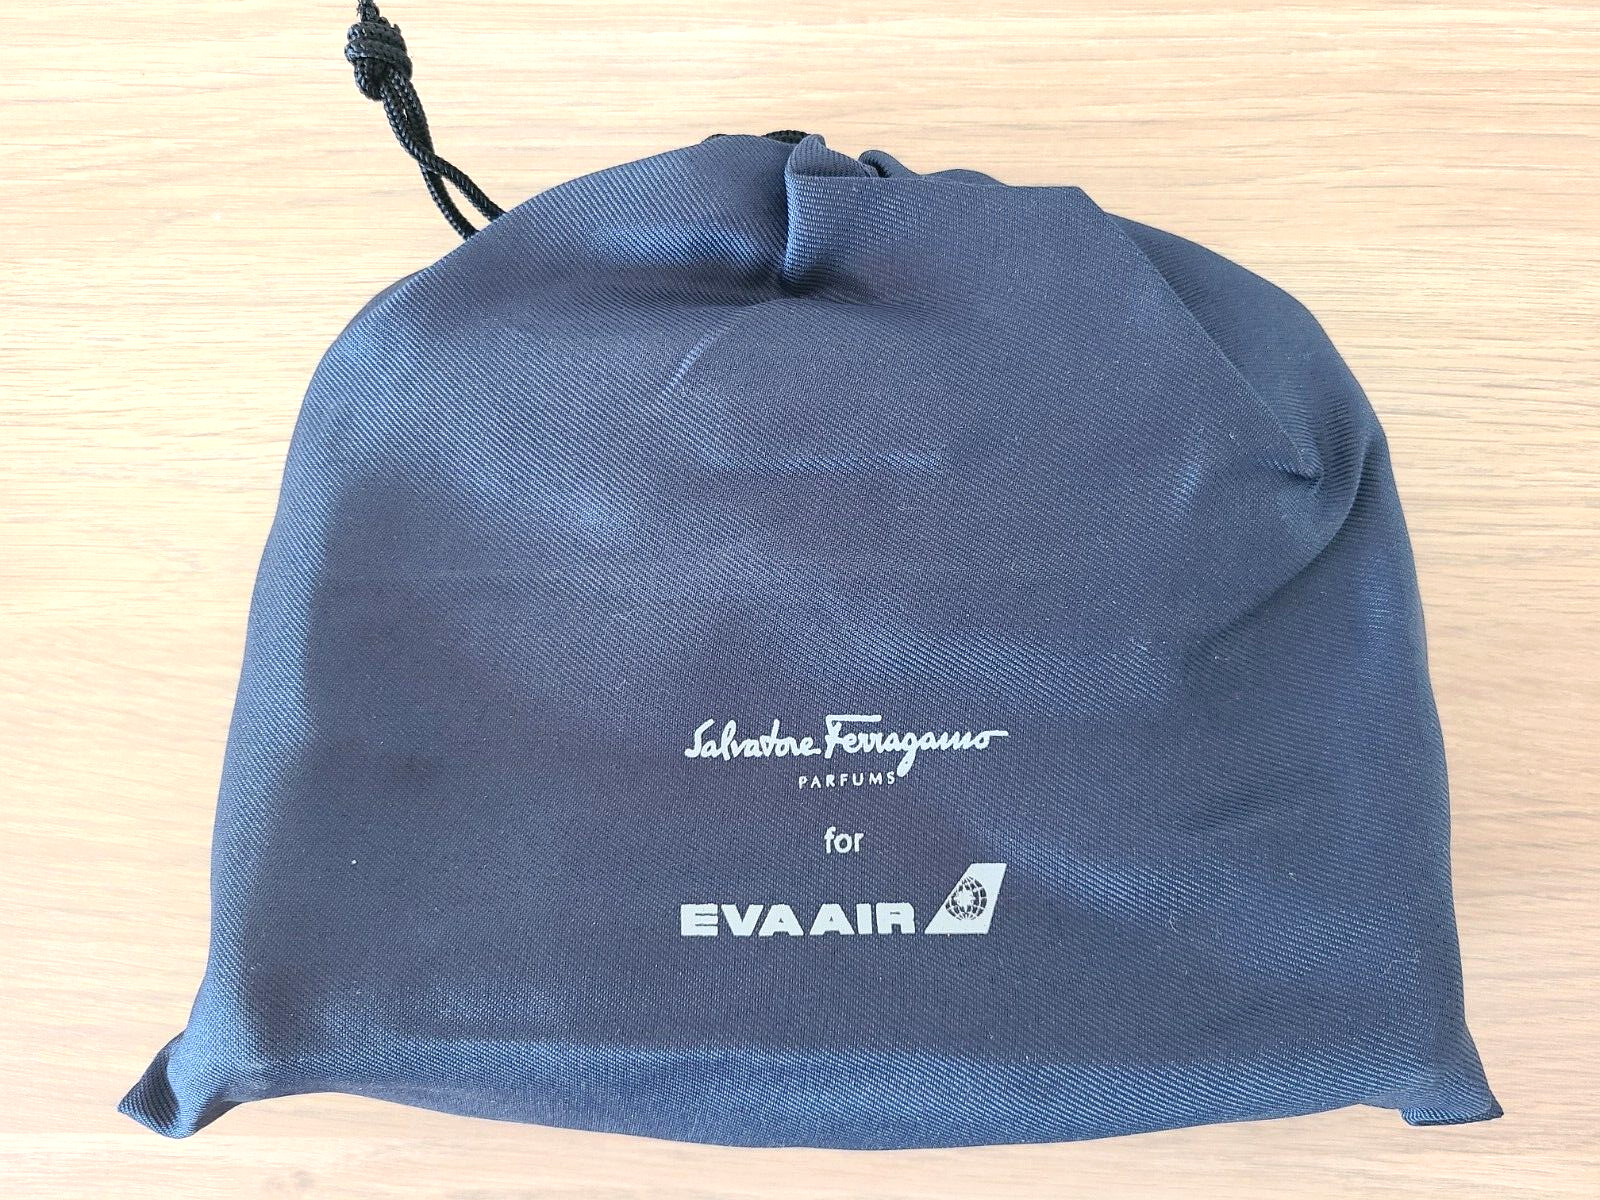 Salvatore Ferragamo for Eva Air Royal Laurel Business Class Amenity Kit